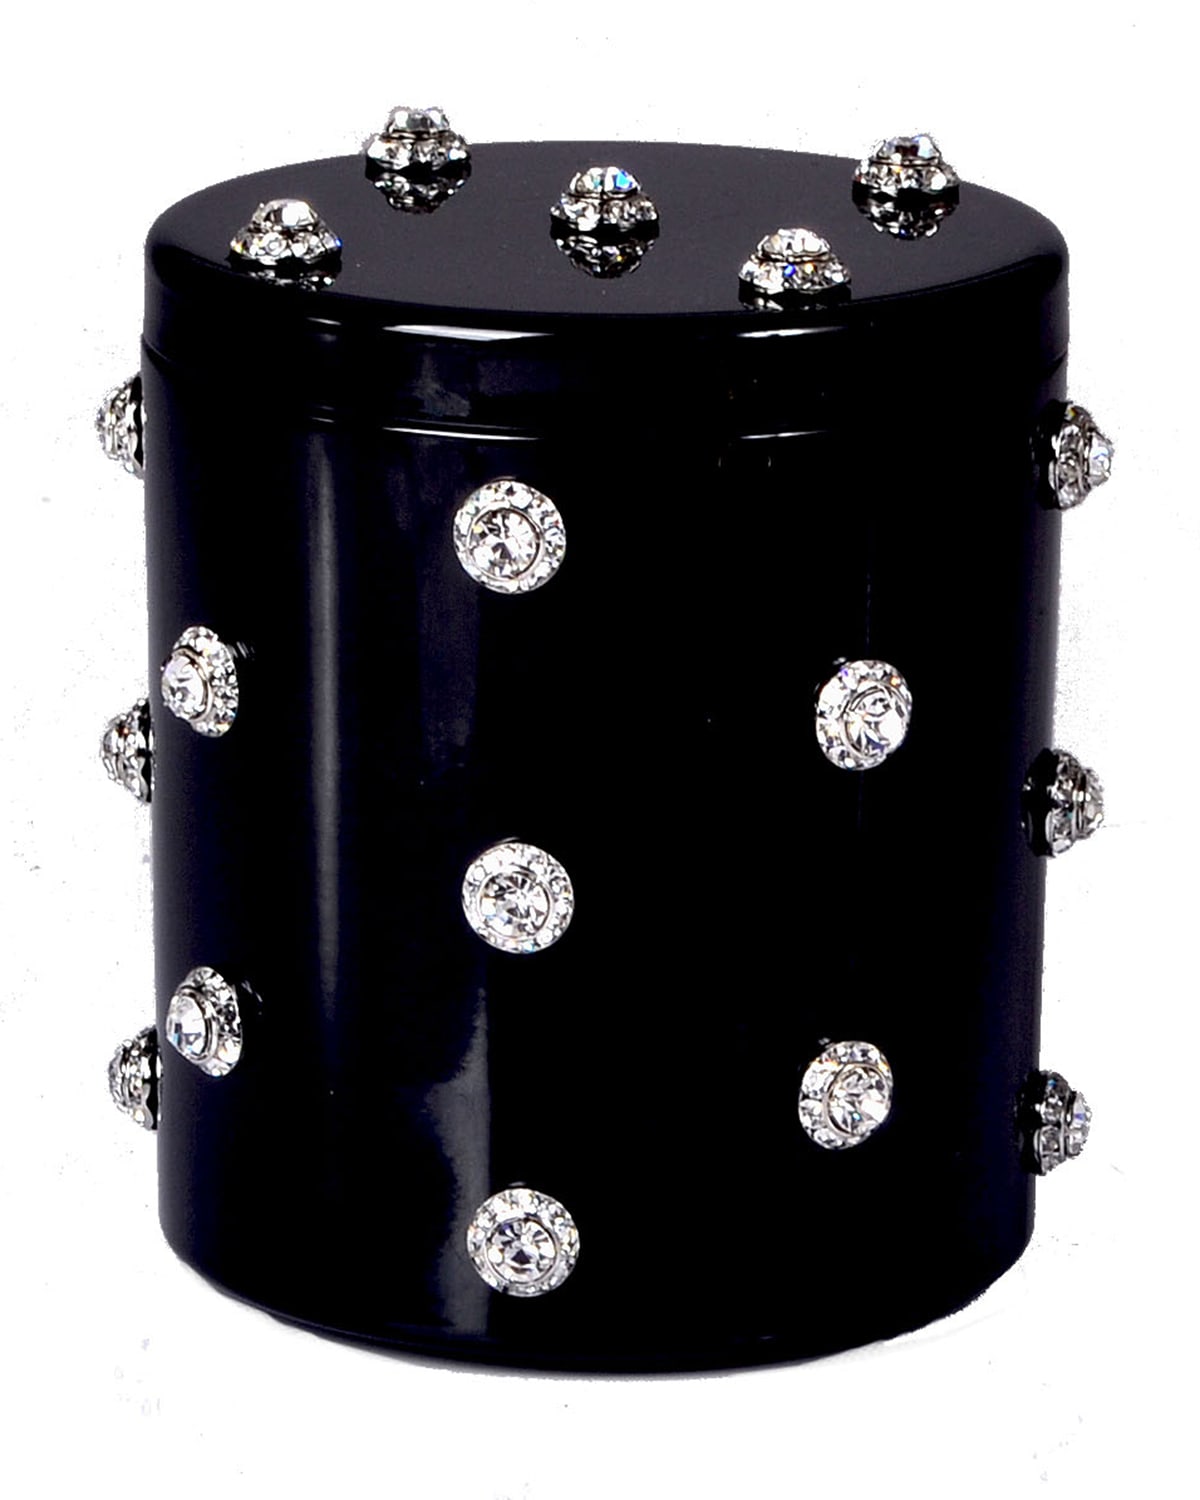 Image Mike & Ally Nova Glass Cotton Swab Jar with Stones, Black